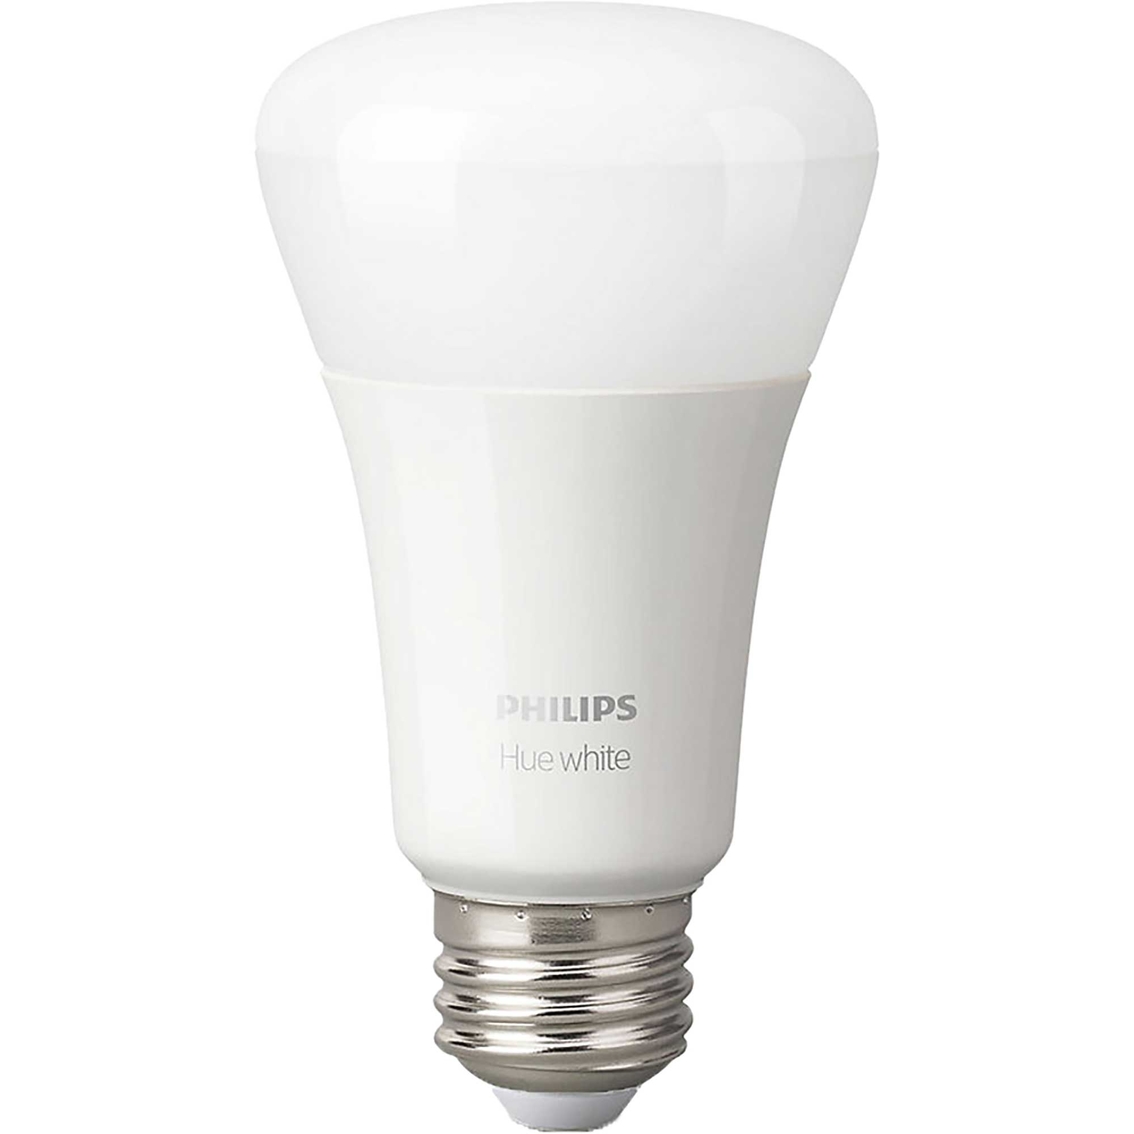 Philips Hue E26 10W White Smart Bulb 2 pk. - Image 2 of 2